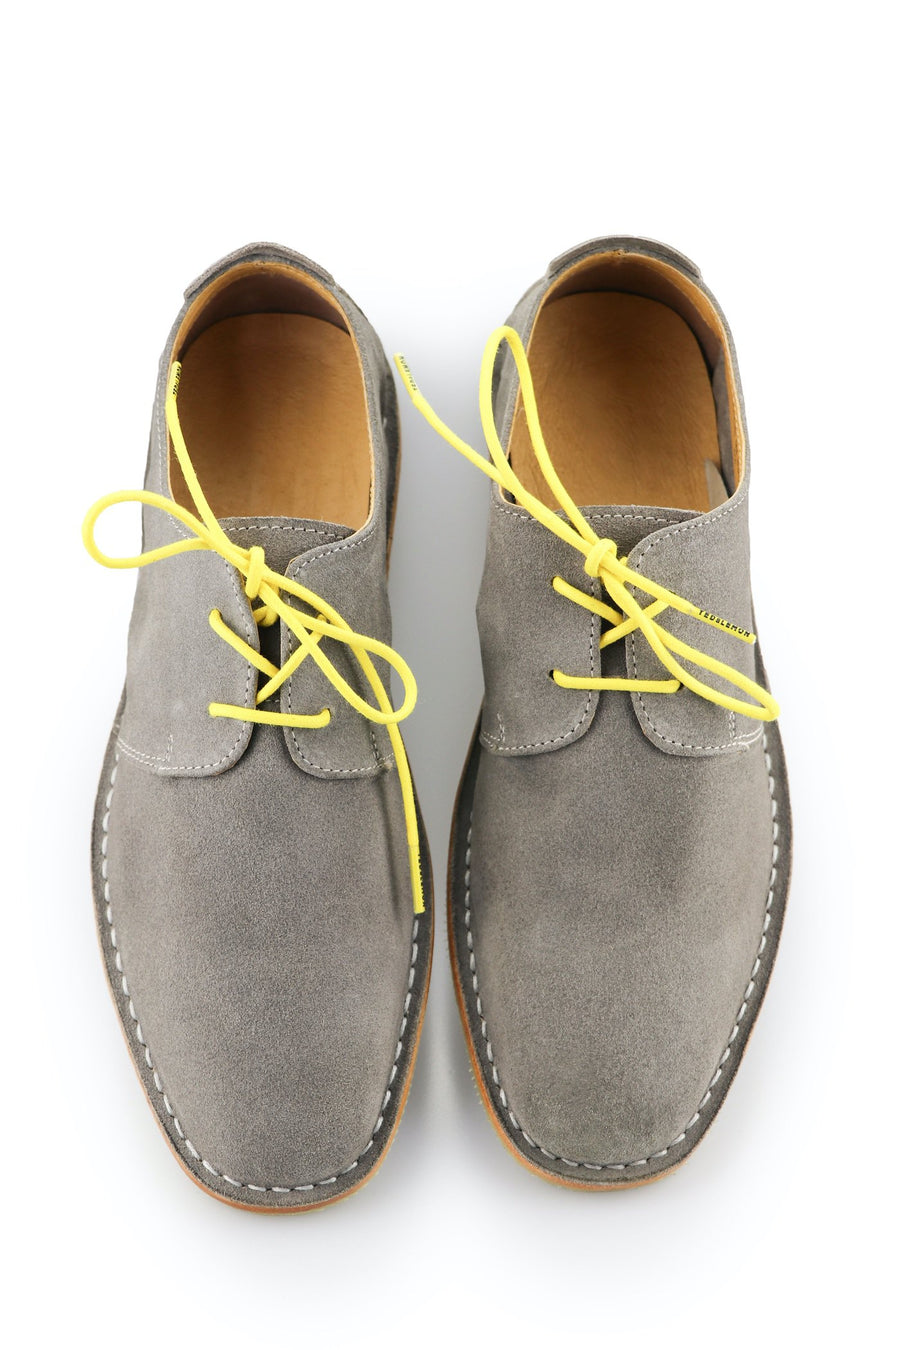 Shoe Laces Lemon Yellow Waxed Cotton Ted and Lemon